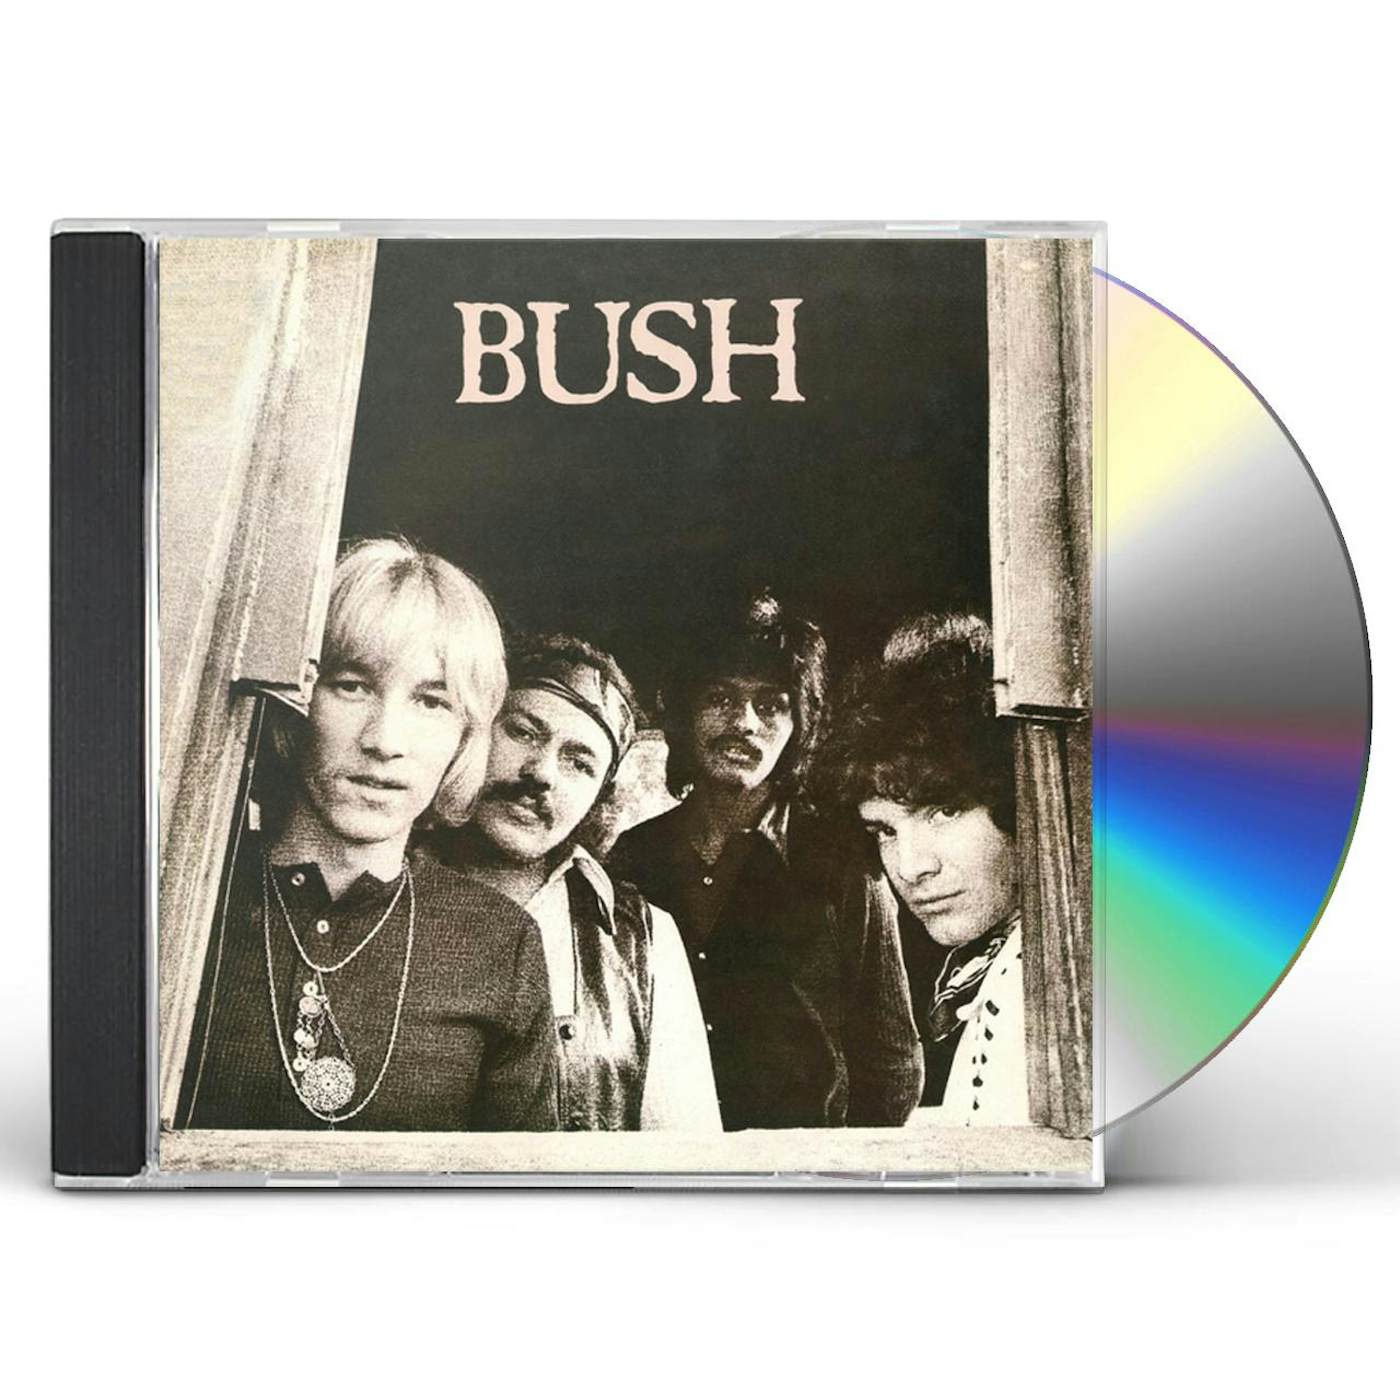 BUSH CD